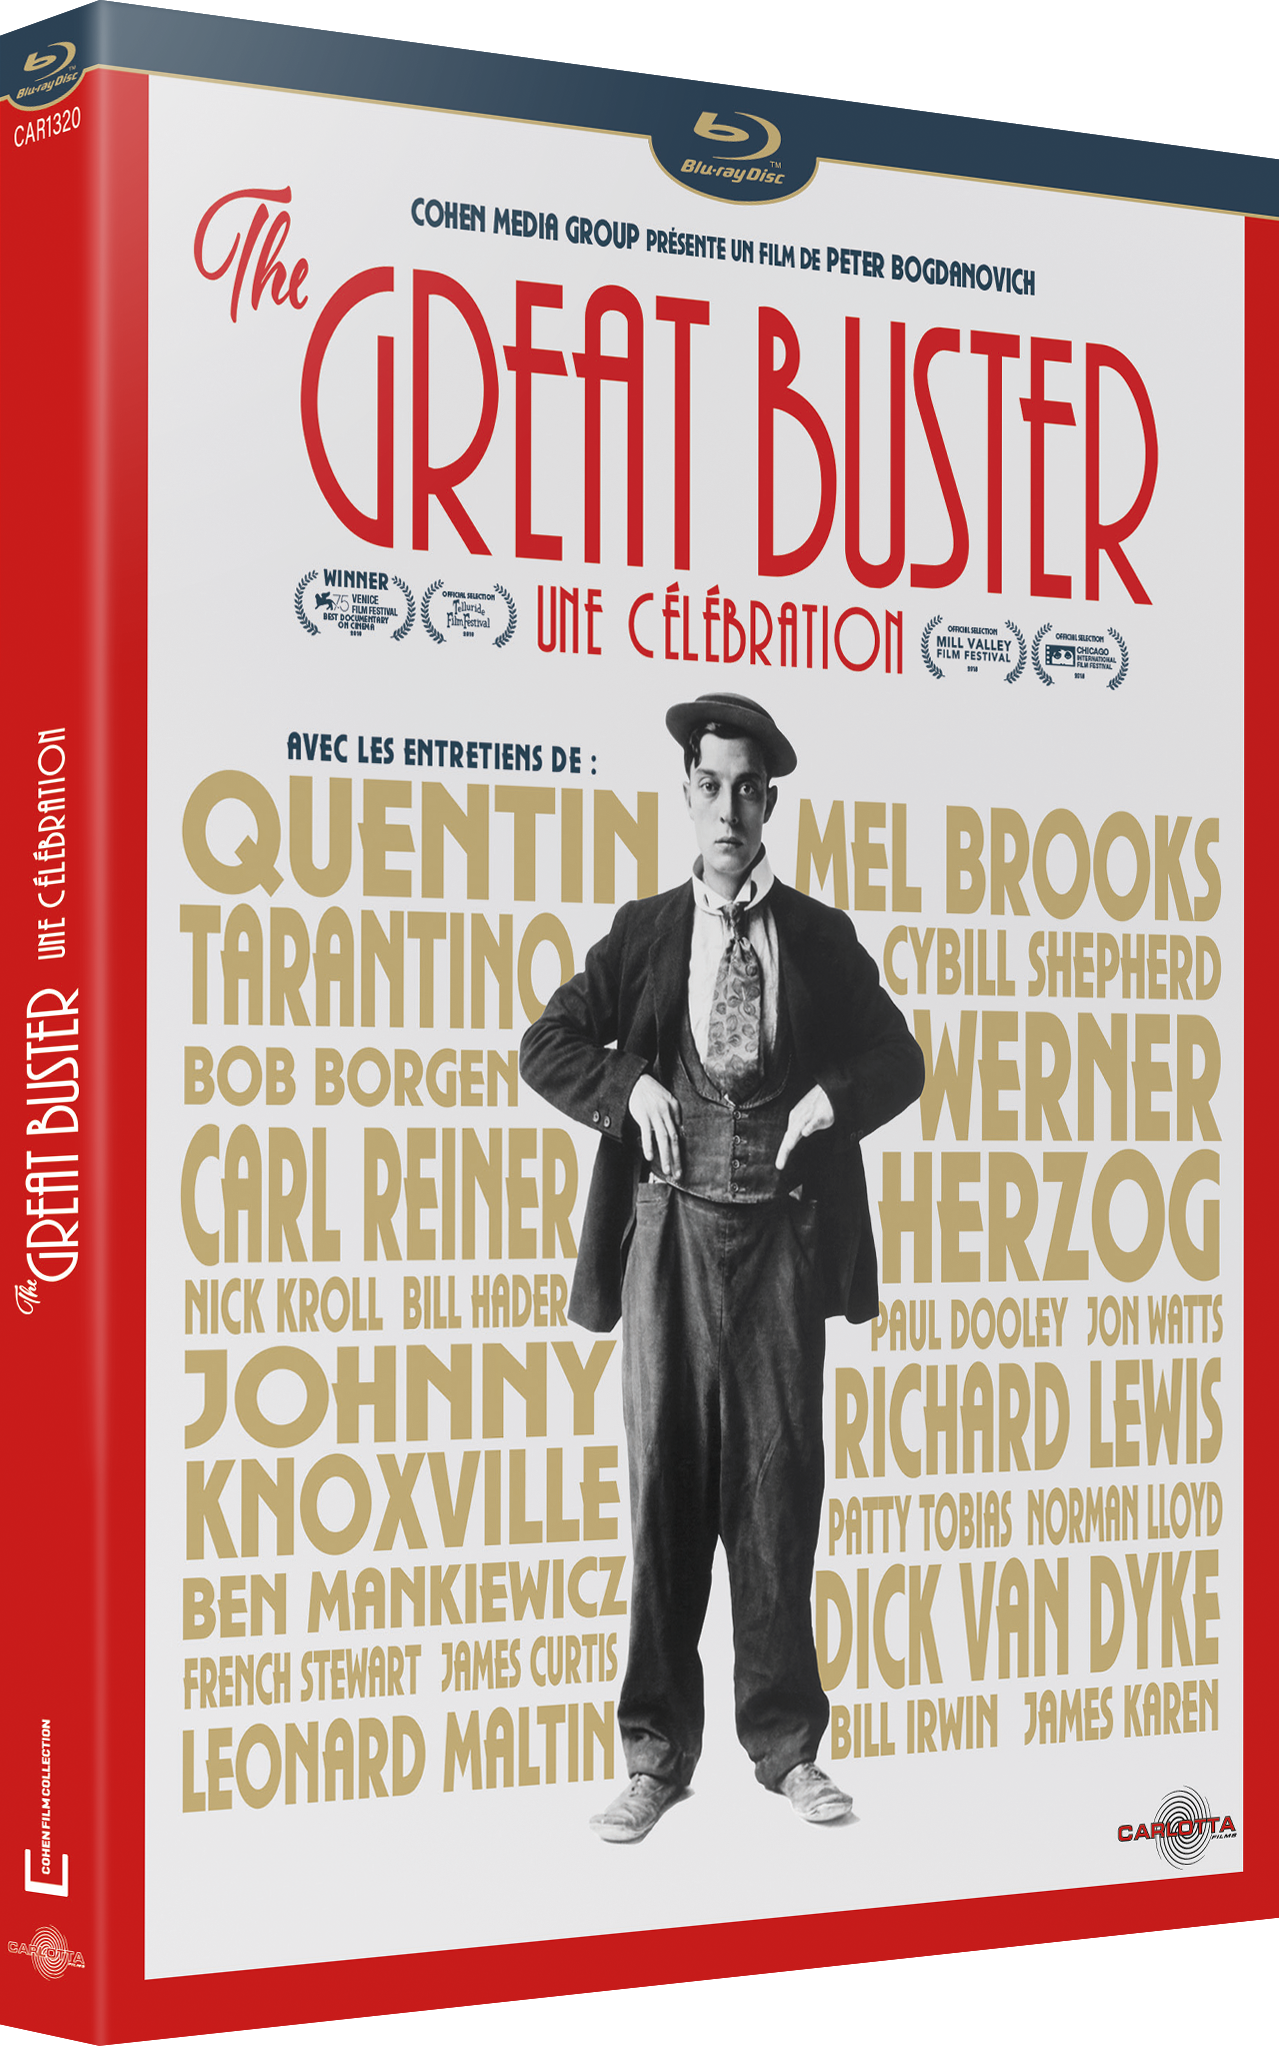 The Great Buster: A Celebration of Peter Bogdanovich – La Boutique